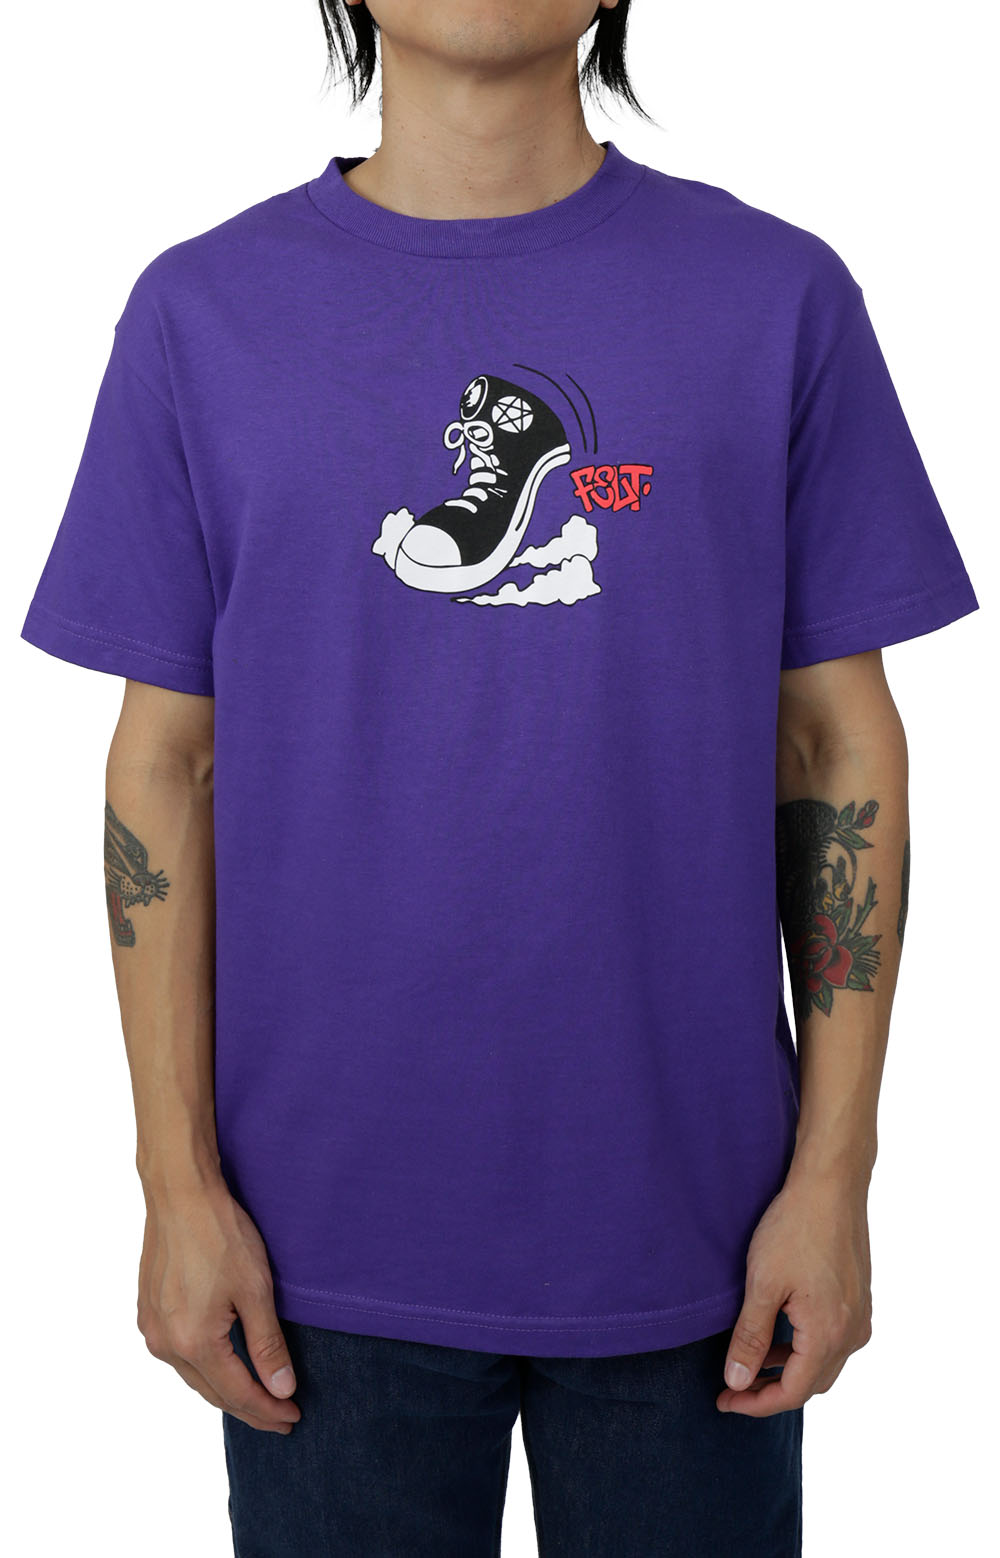 Chucks T-Shirt - Purple